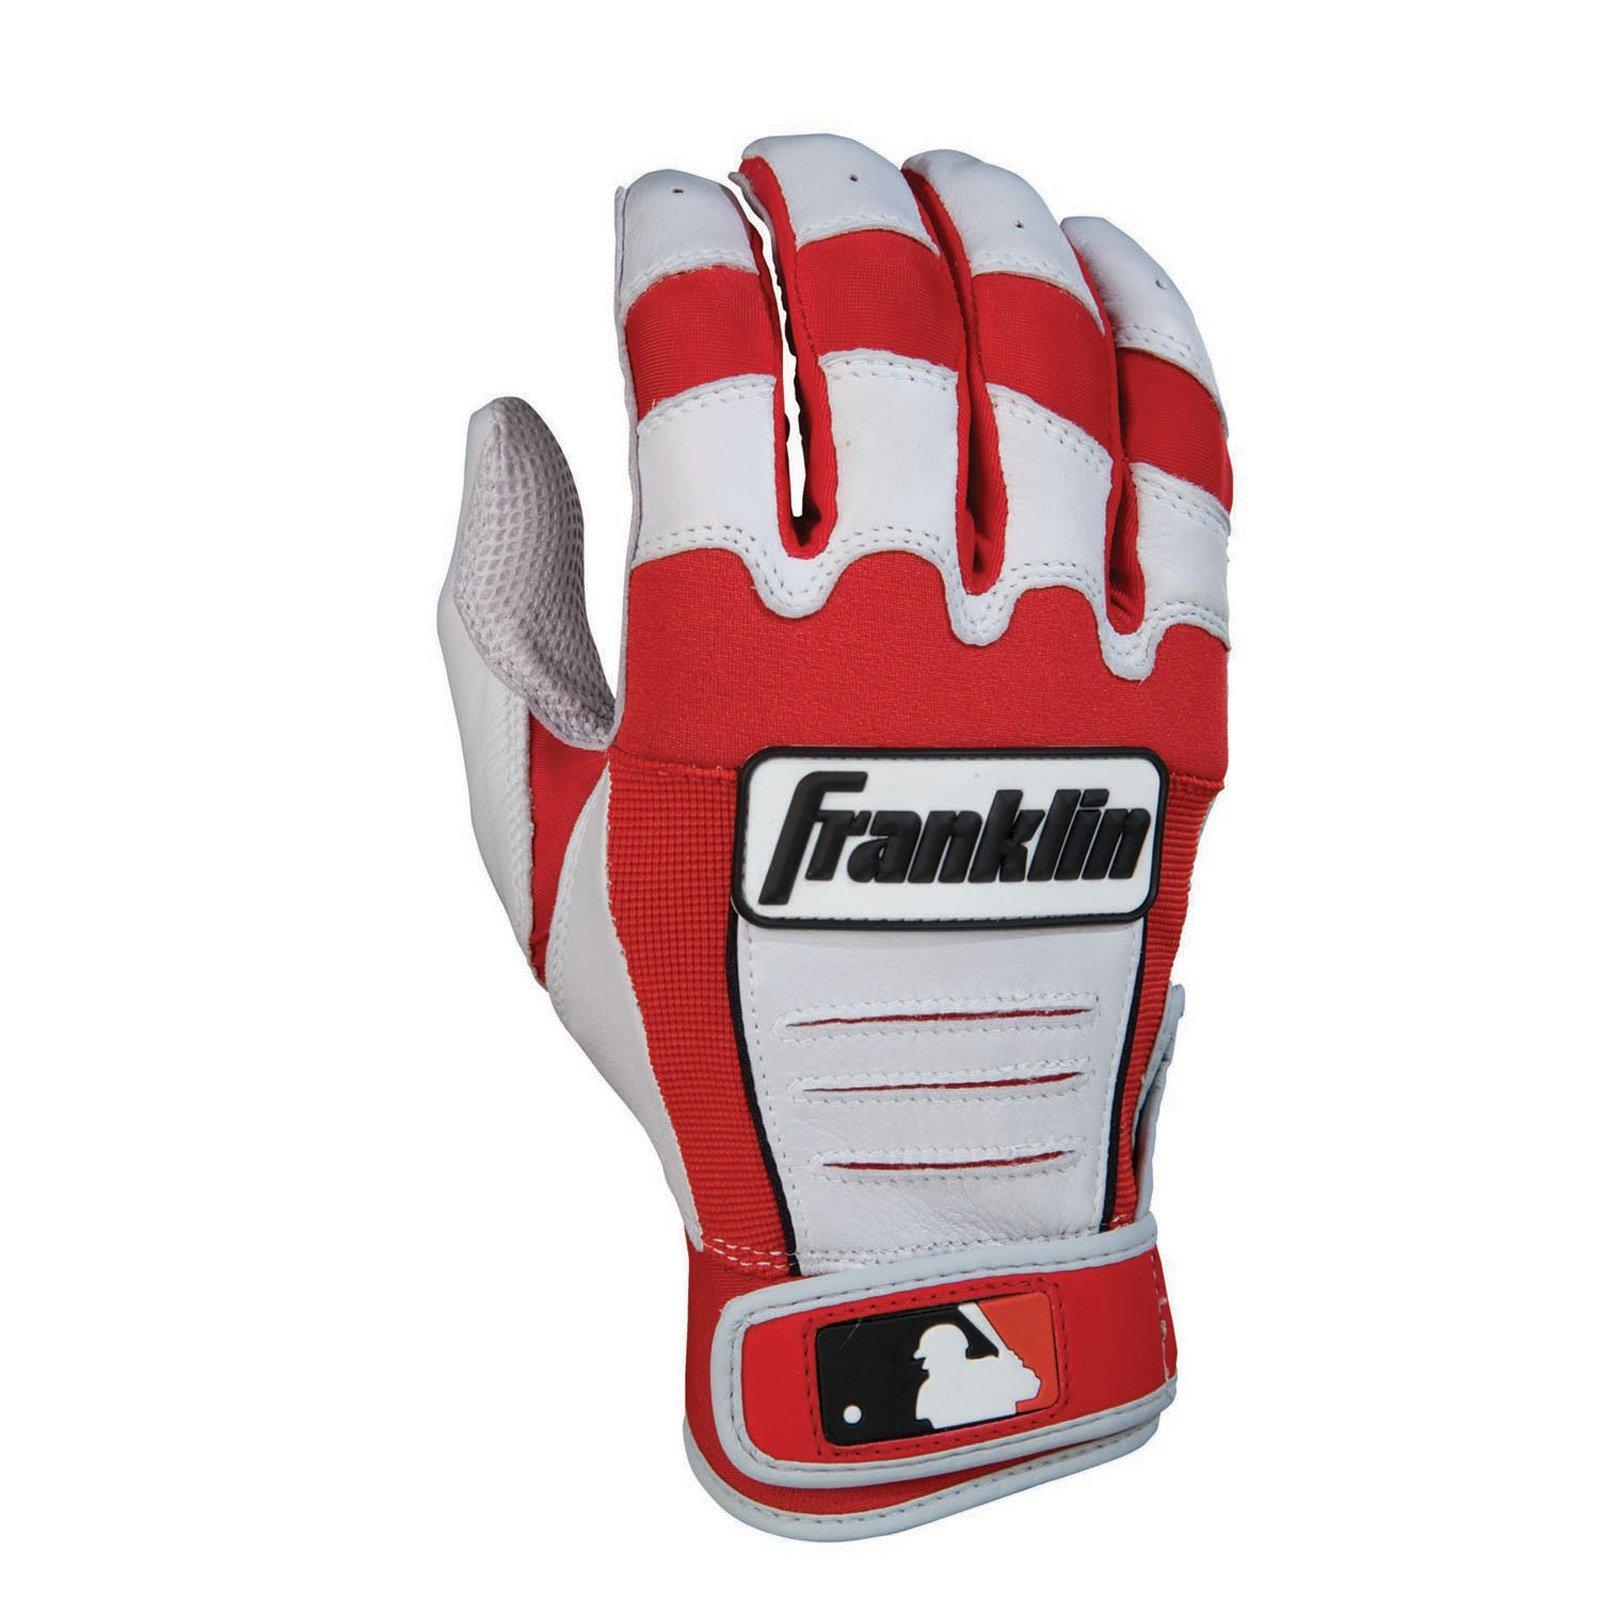 Franklin CFX Pro Baseball Batting Gloves Red White XL 